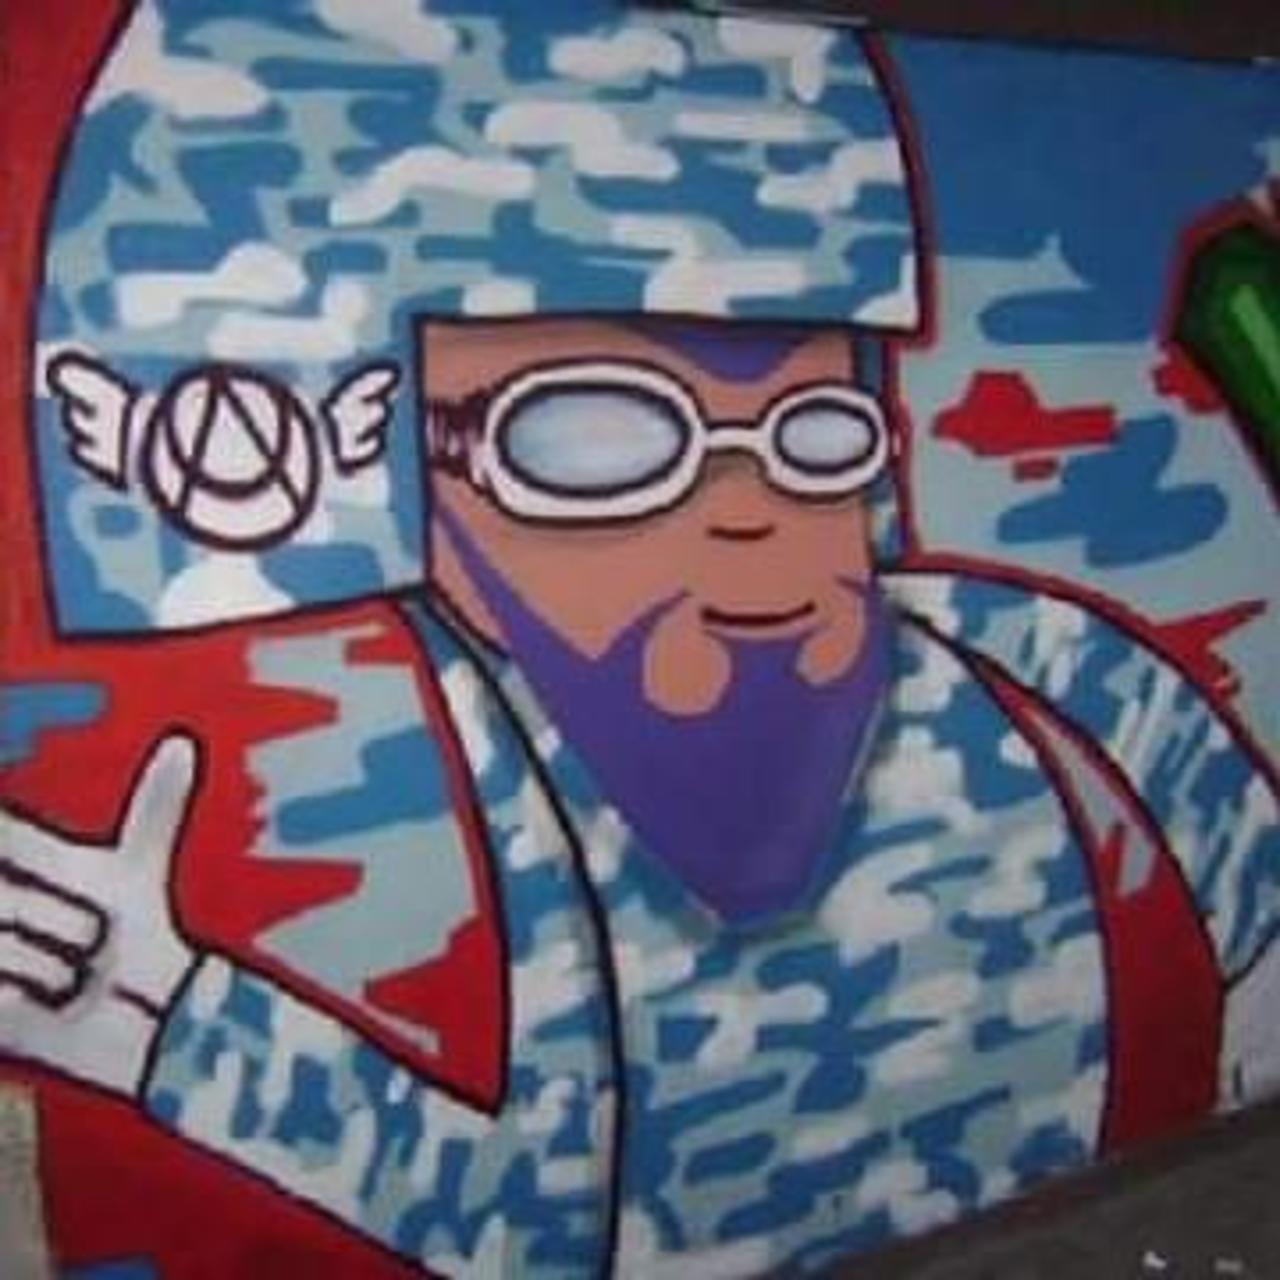 Barbazul #nobã #artistasurbanoscrew #streetartrio #streetart #graffiti #rjvandal #ruasdazn by artistasurbanoscrew http://t.co/bprSZqYKqD